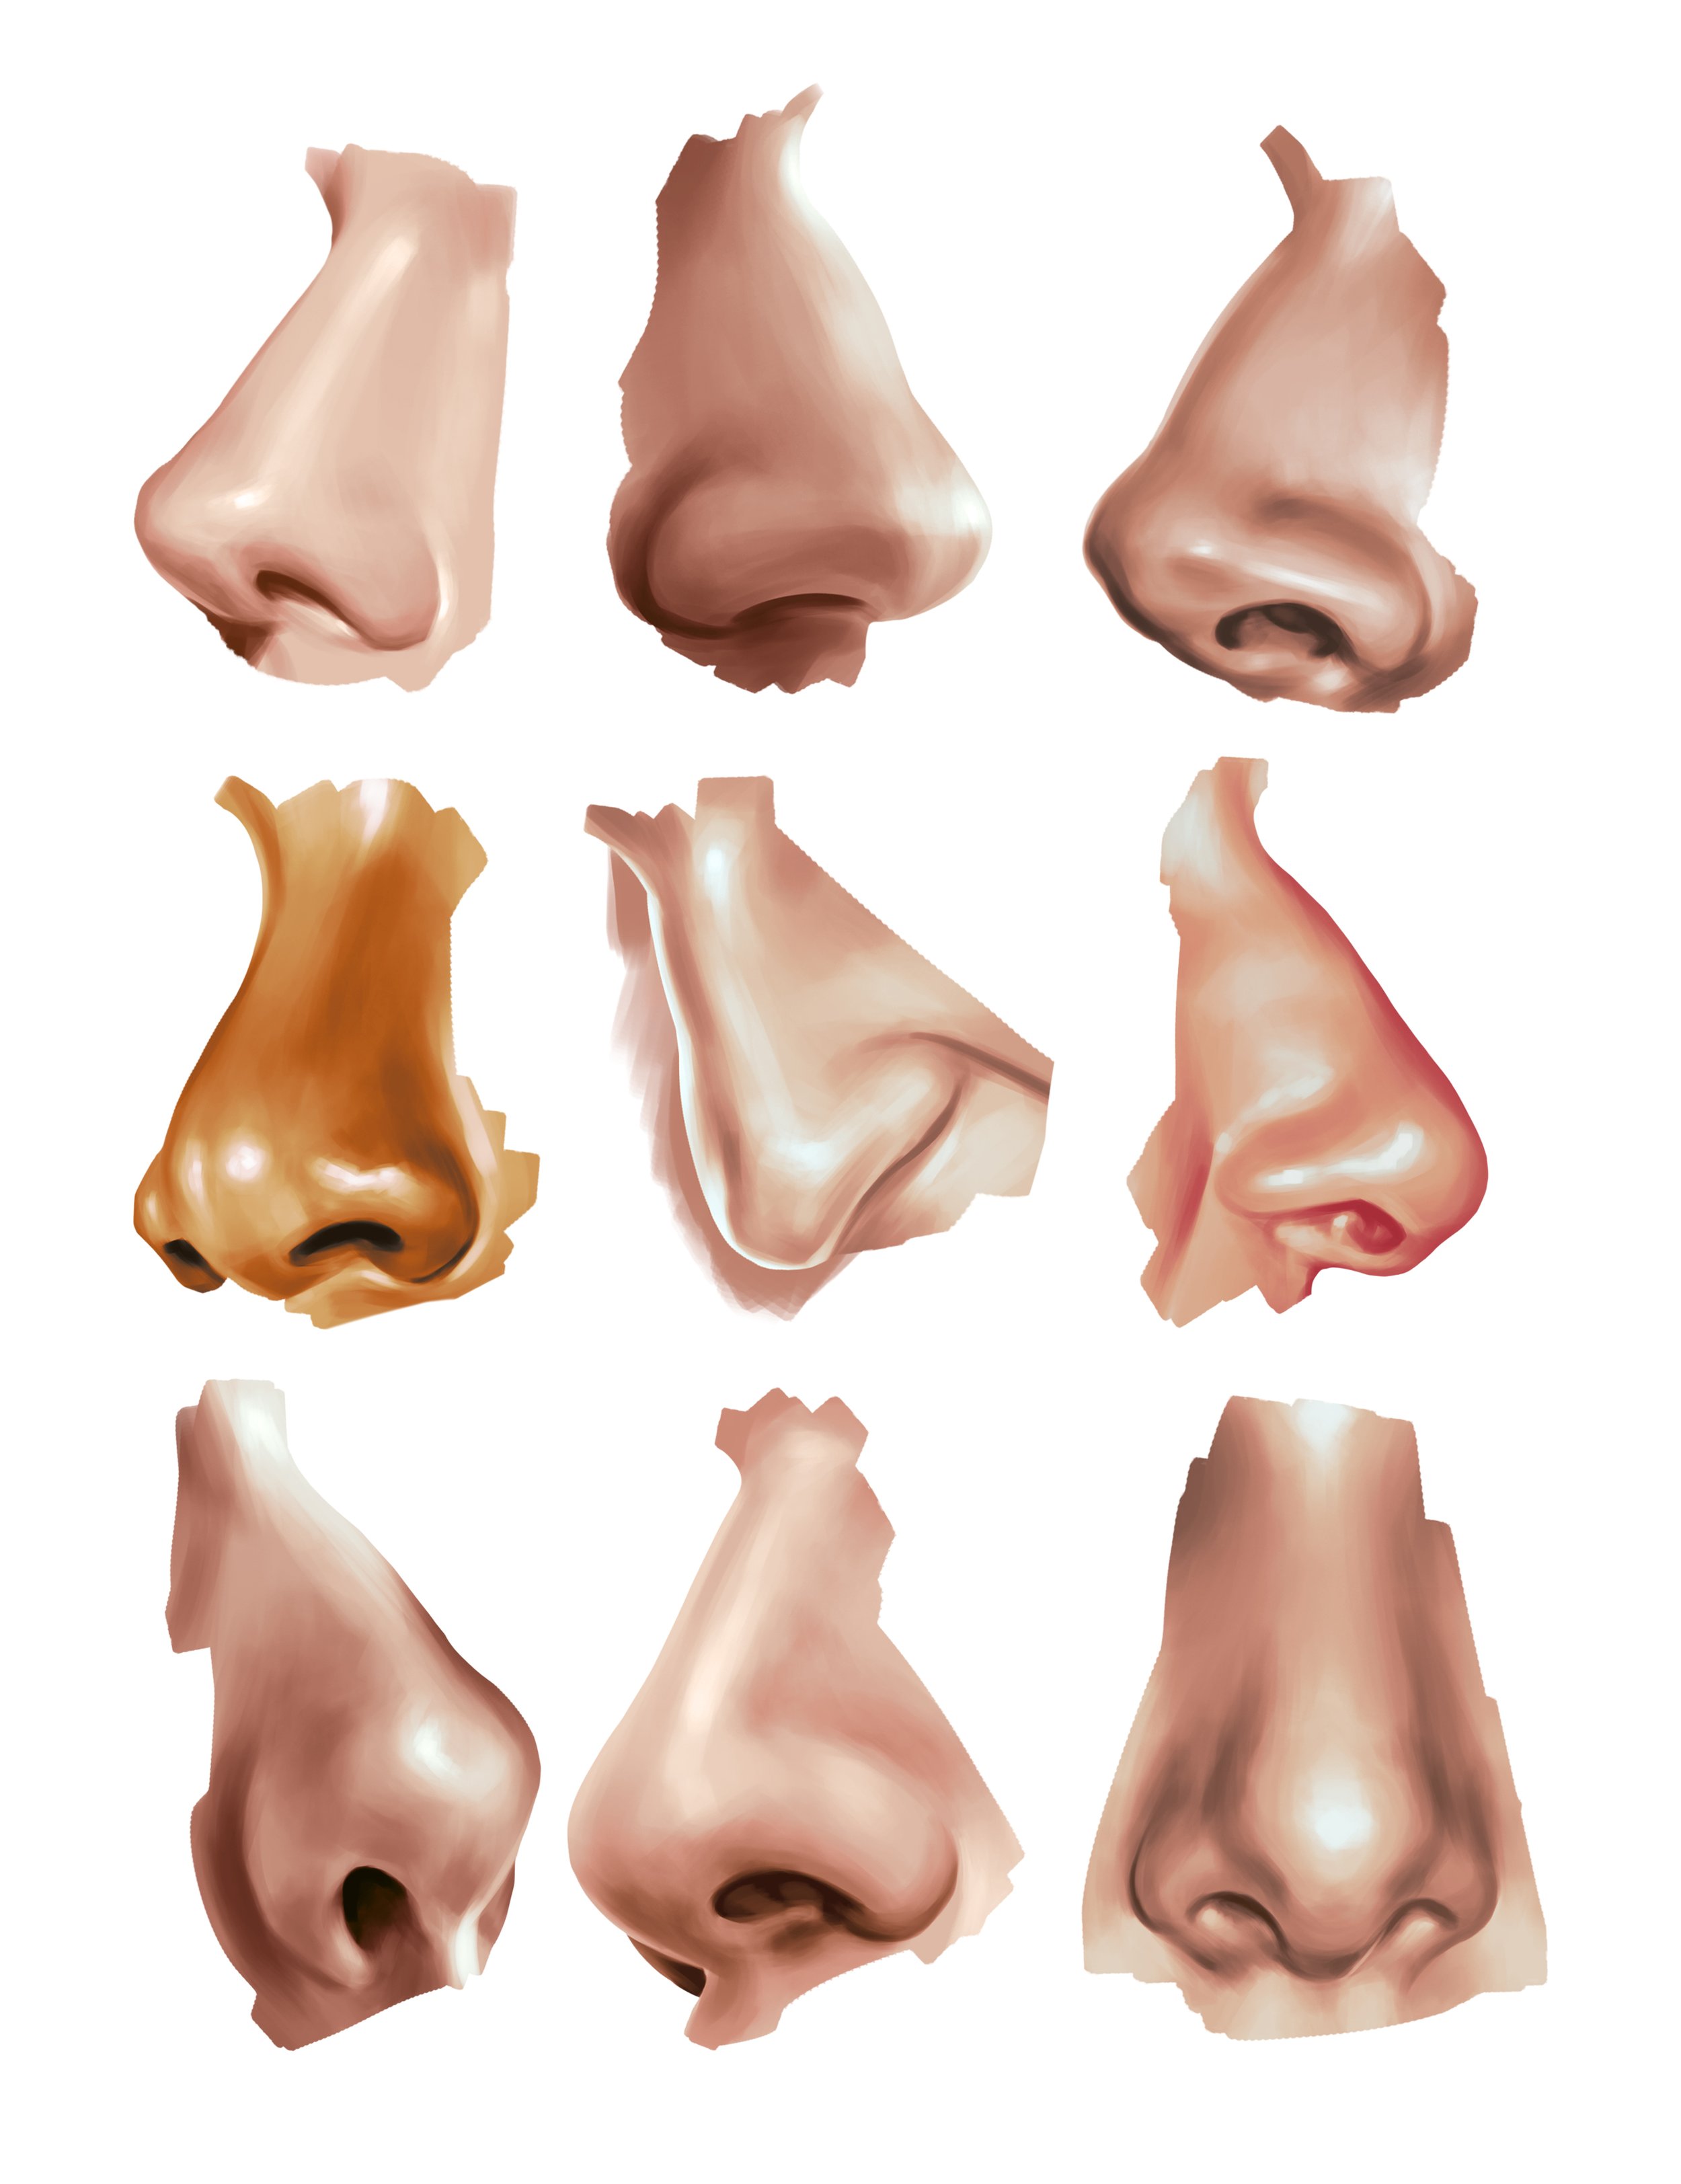 Noses.jpg